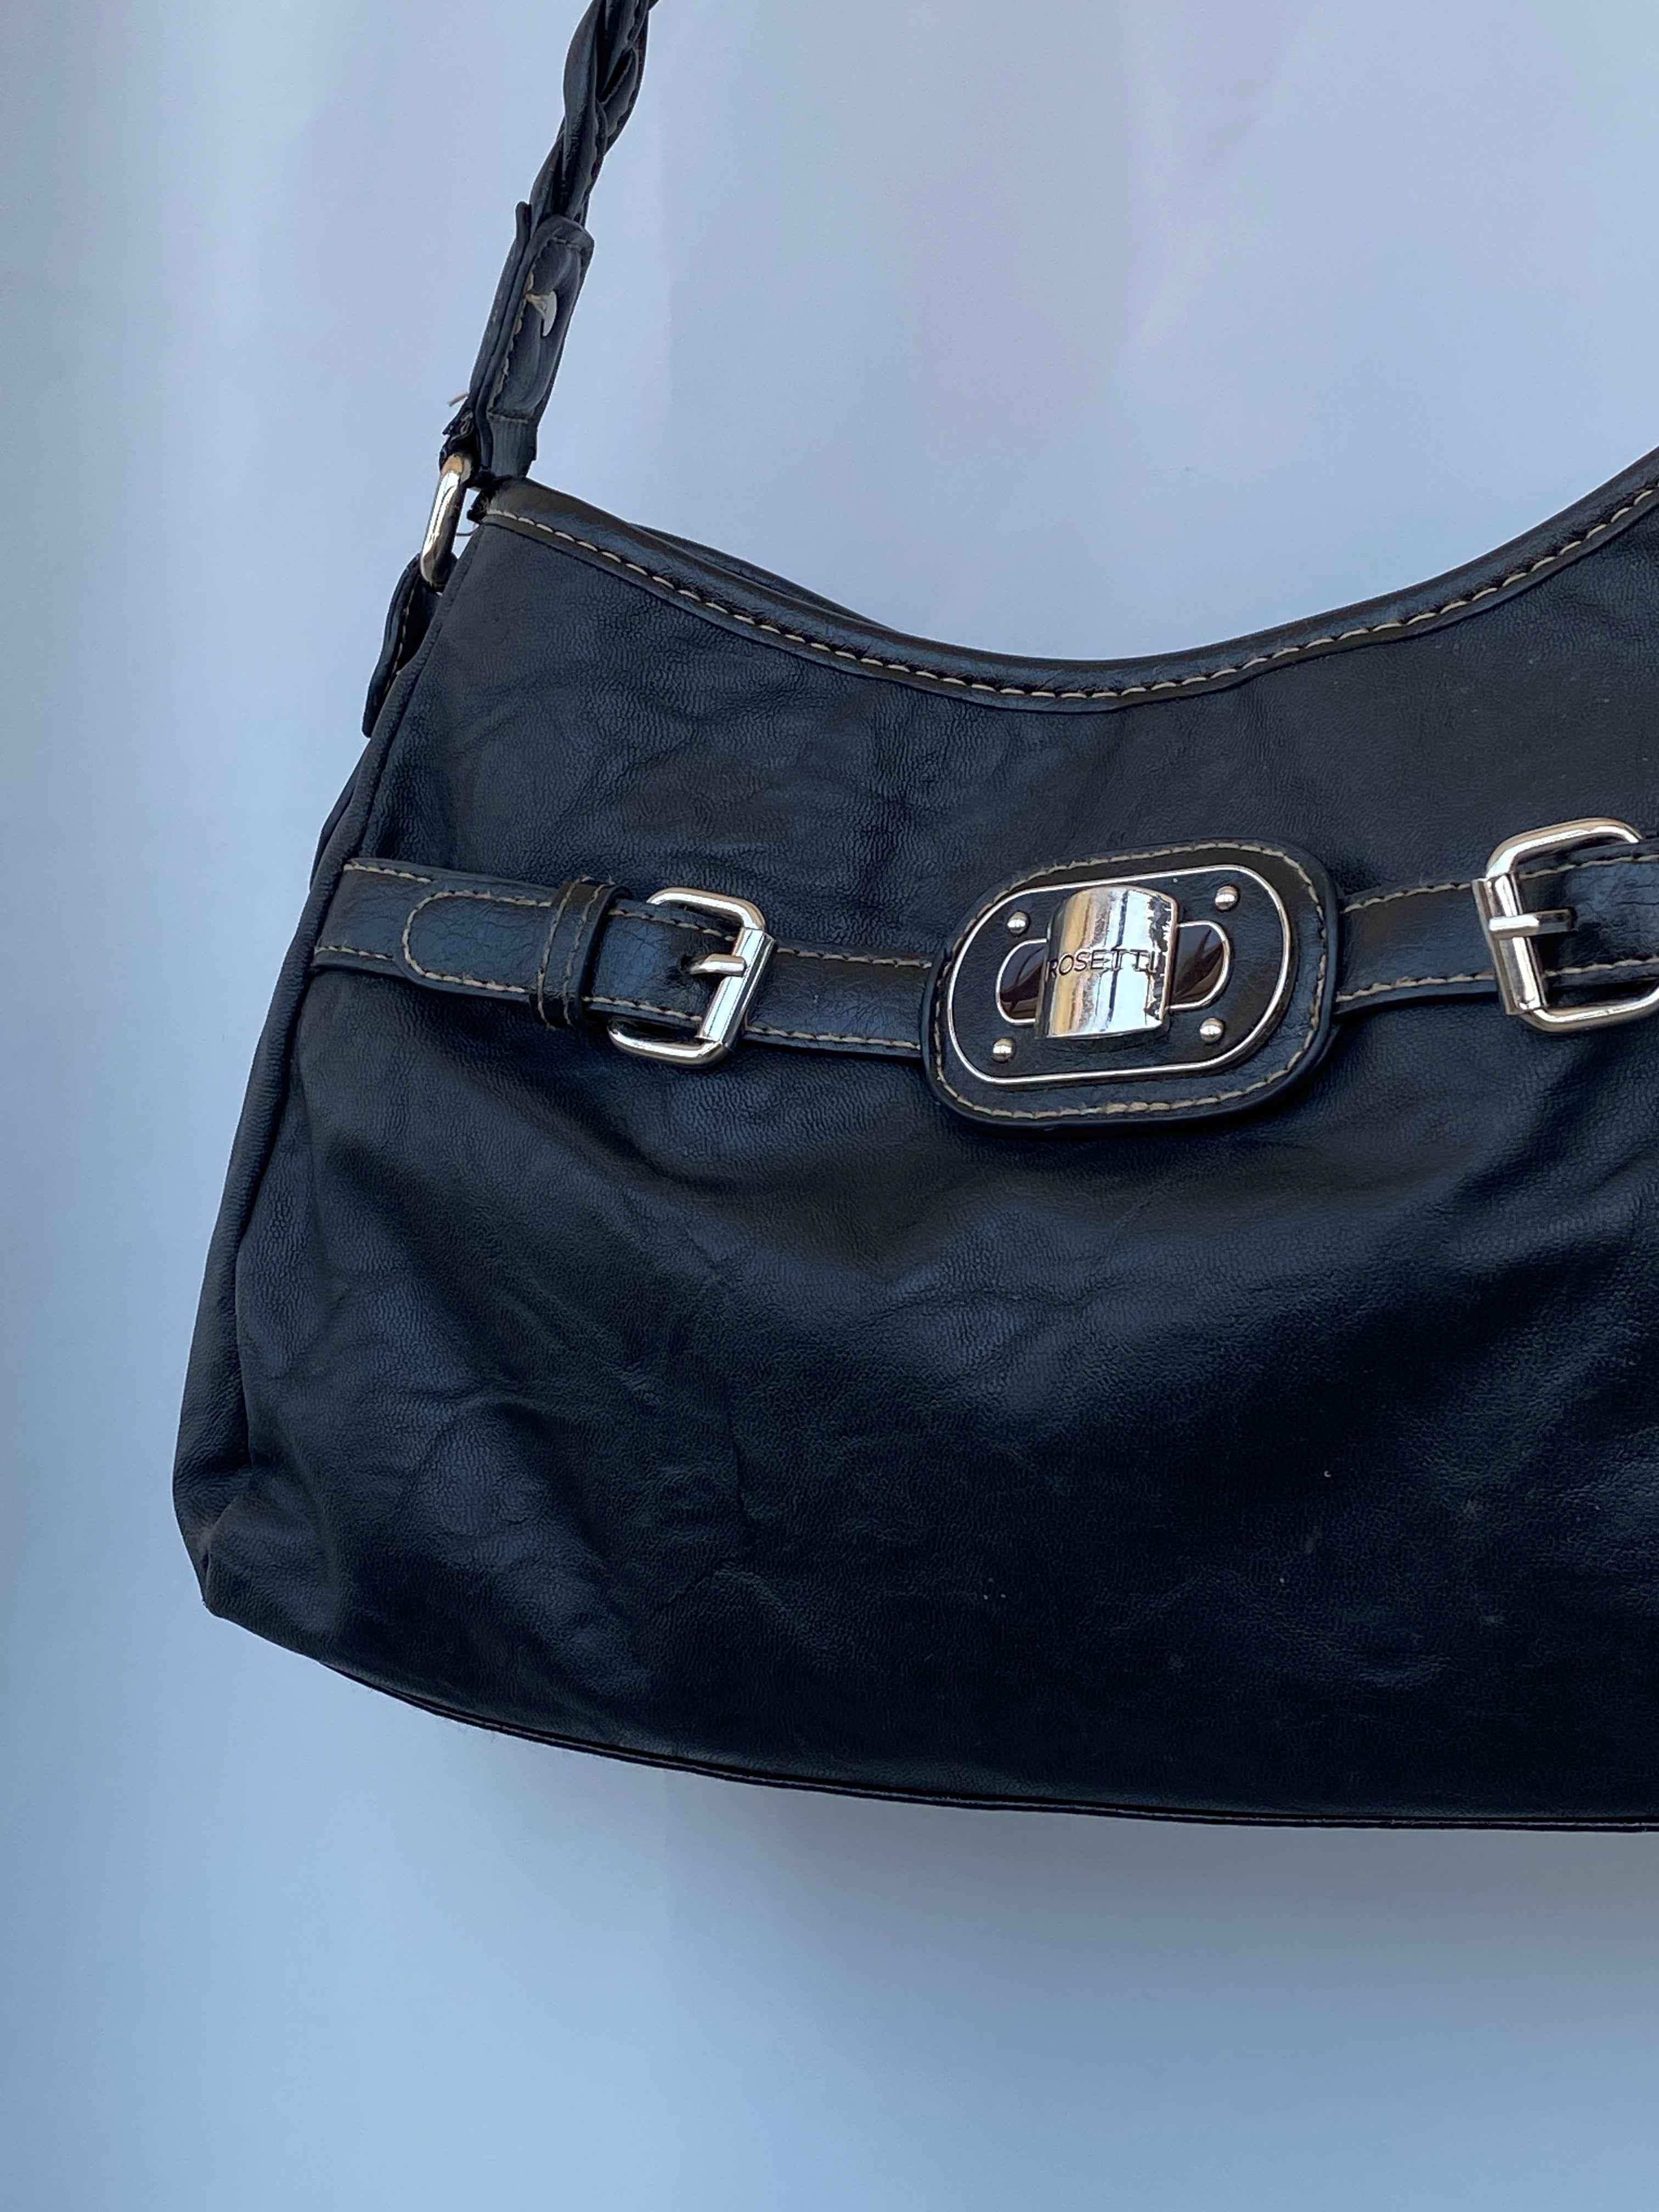 Vintage Rosetti Shoulder Bag - Balagan Vintage Shoulder Bag bag, rosetti, shoulder bag